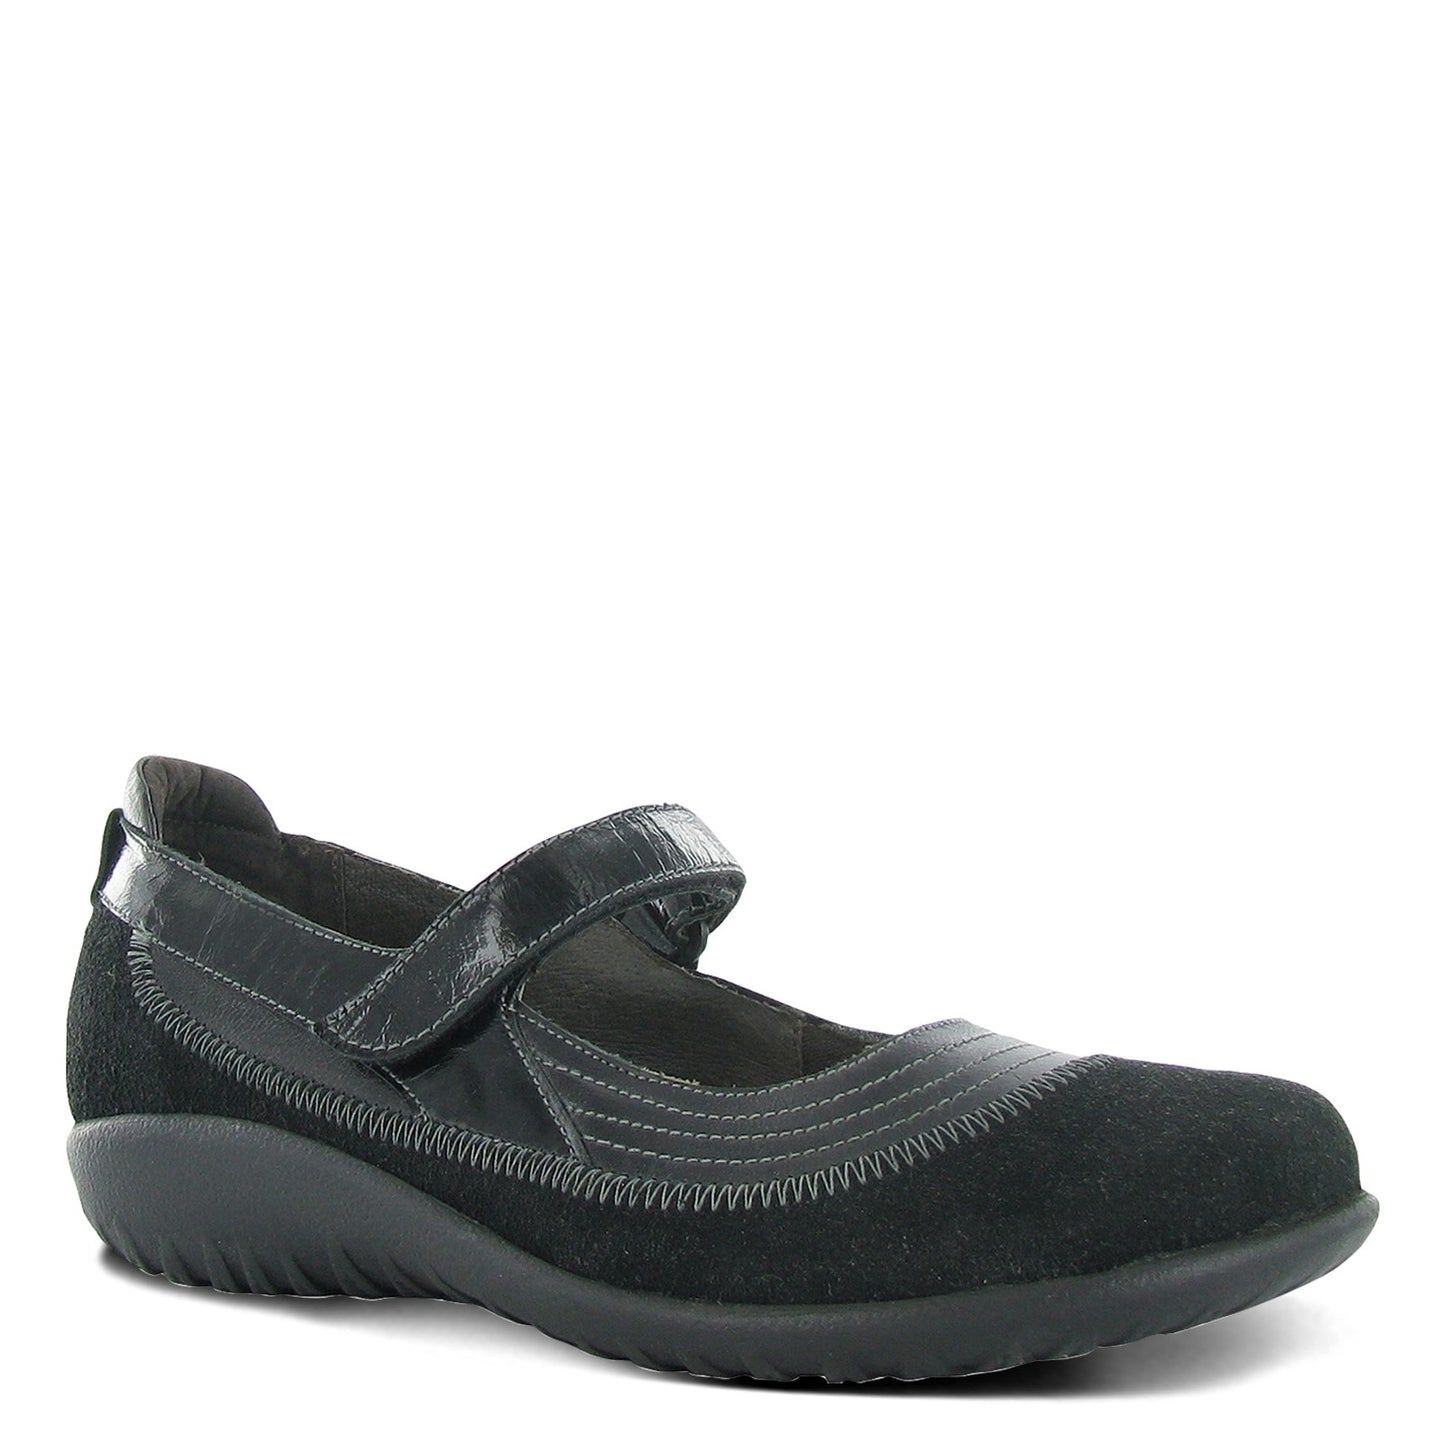 Peltz Shoes  Women's Naot Kirei MaryJane Slip on Shoes BLACK MADRAS 11042-N41